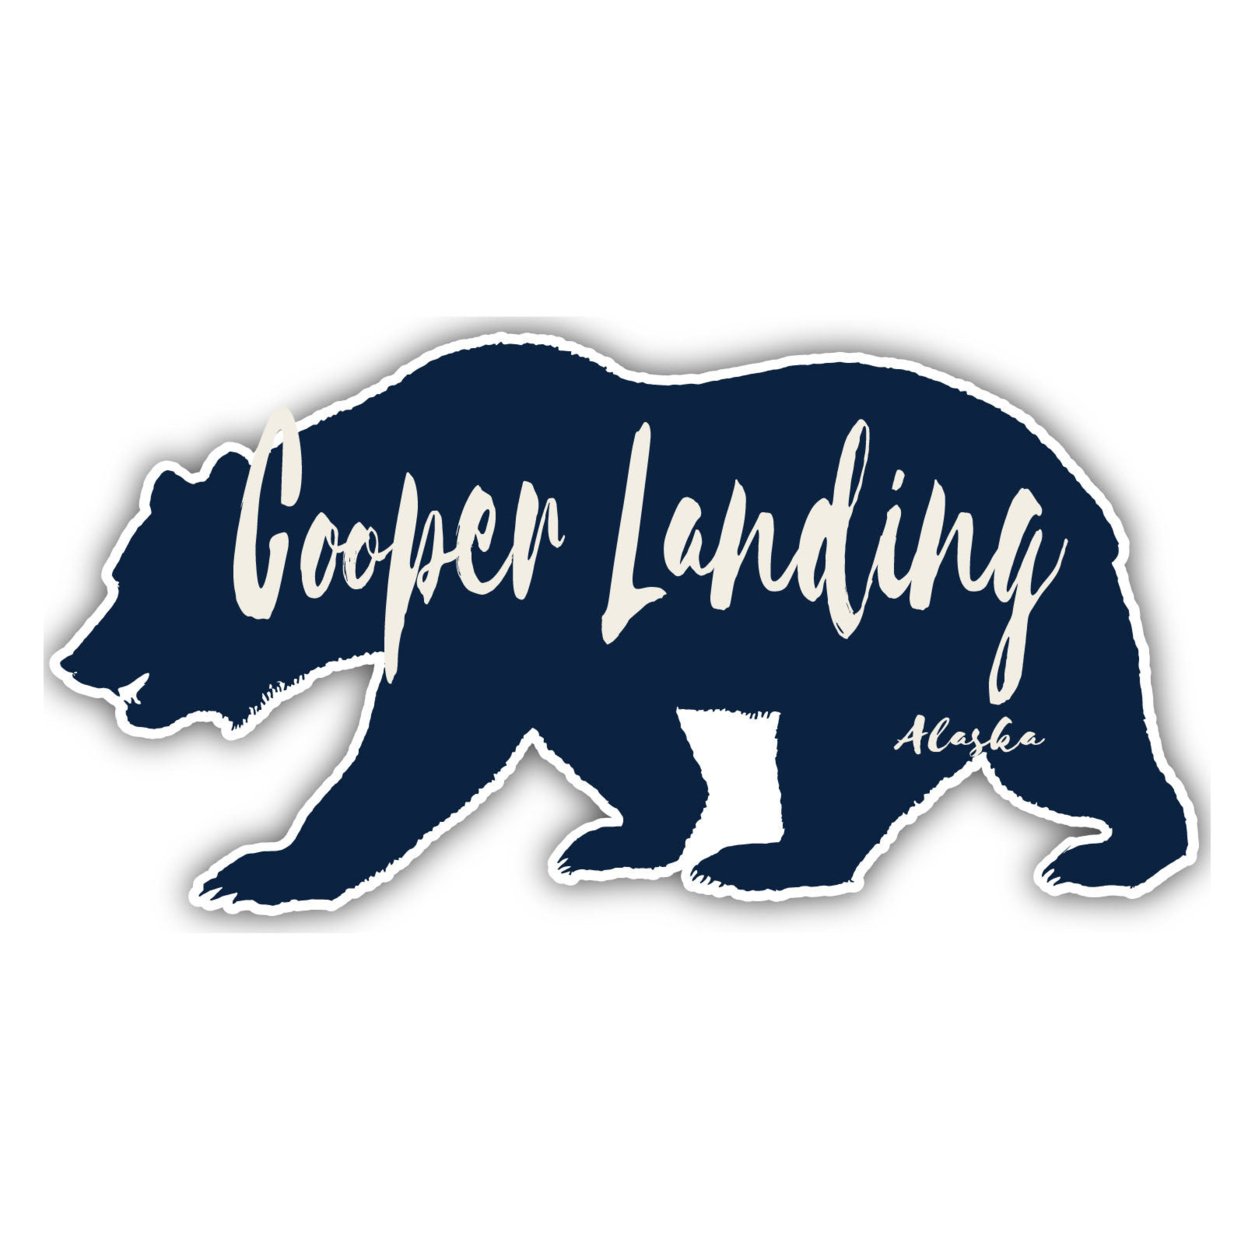 Cooper Landing Alaska Souvenir Decorative Stickers (Choose Theme And Size) - 4-Pack, 10-Inch, Adventures Awaits